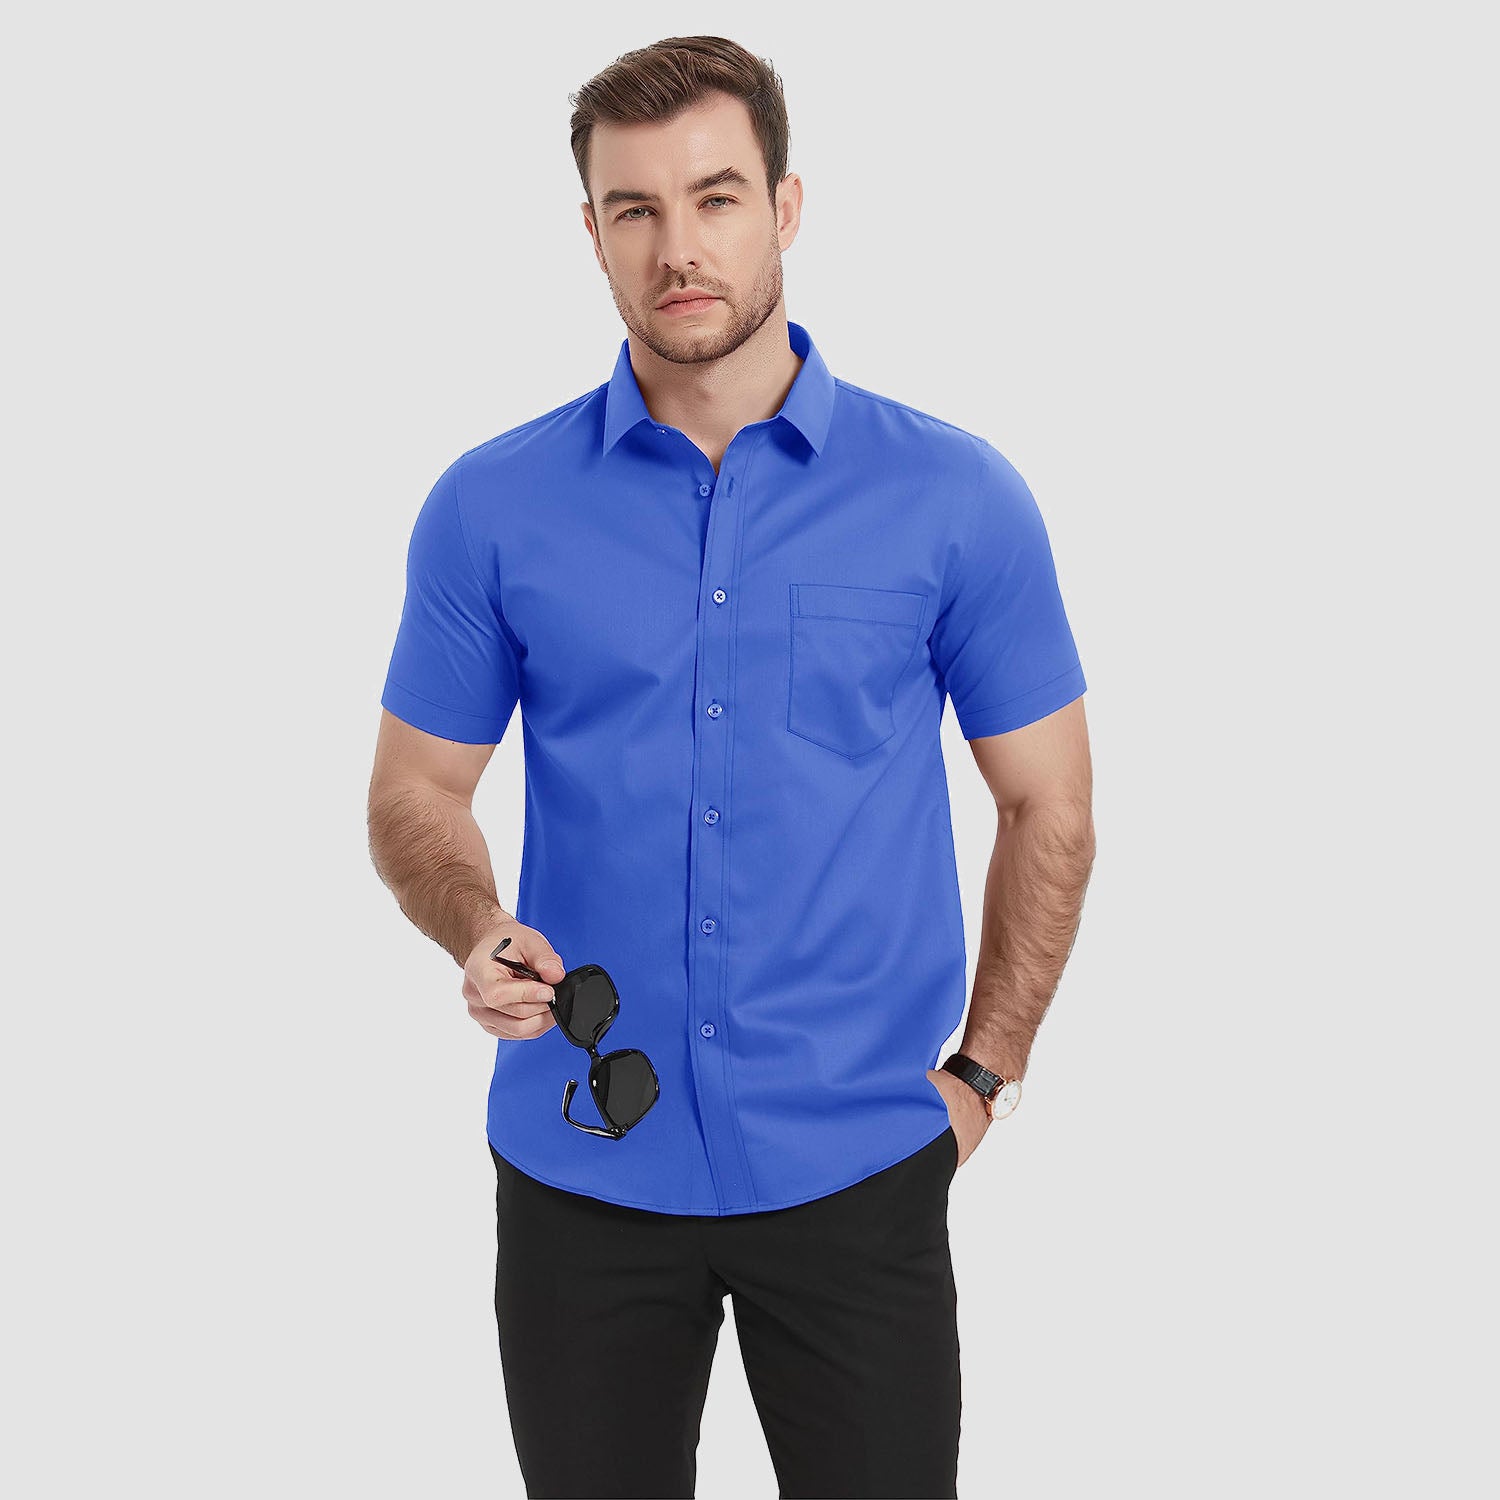 Men's Dress Shirts Short Sleeve with Pocket Cotton Regular Fit Business Shirts